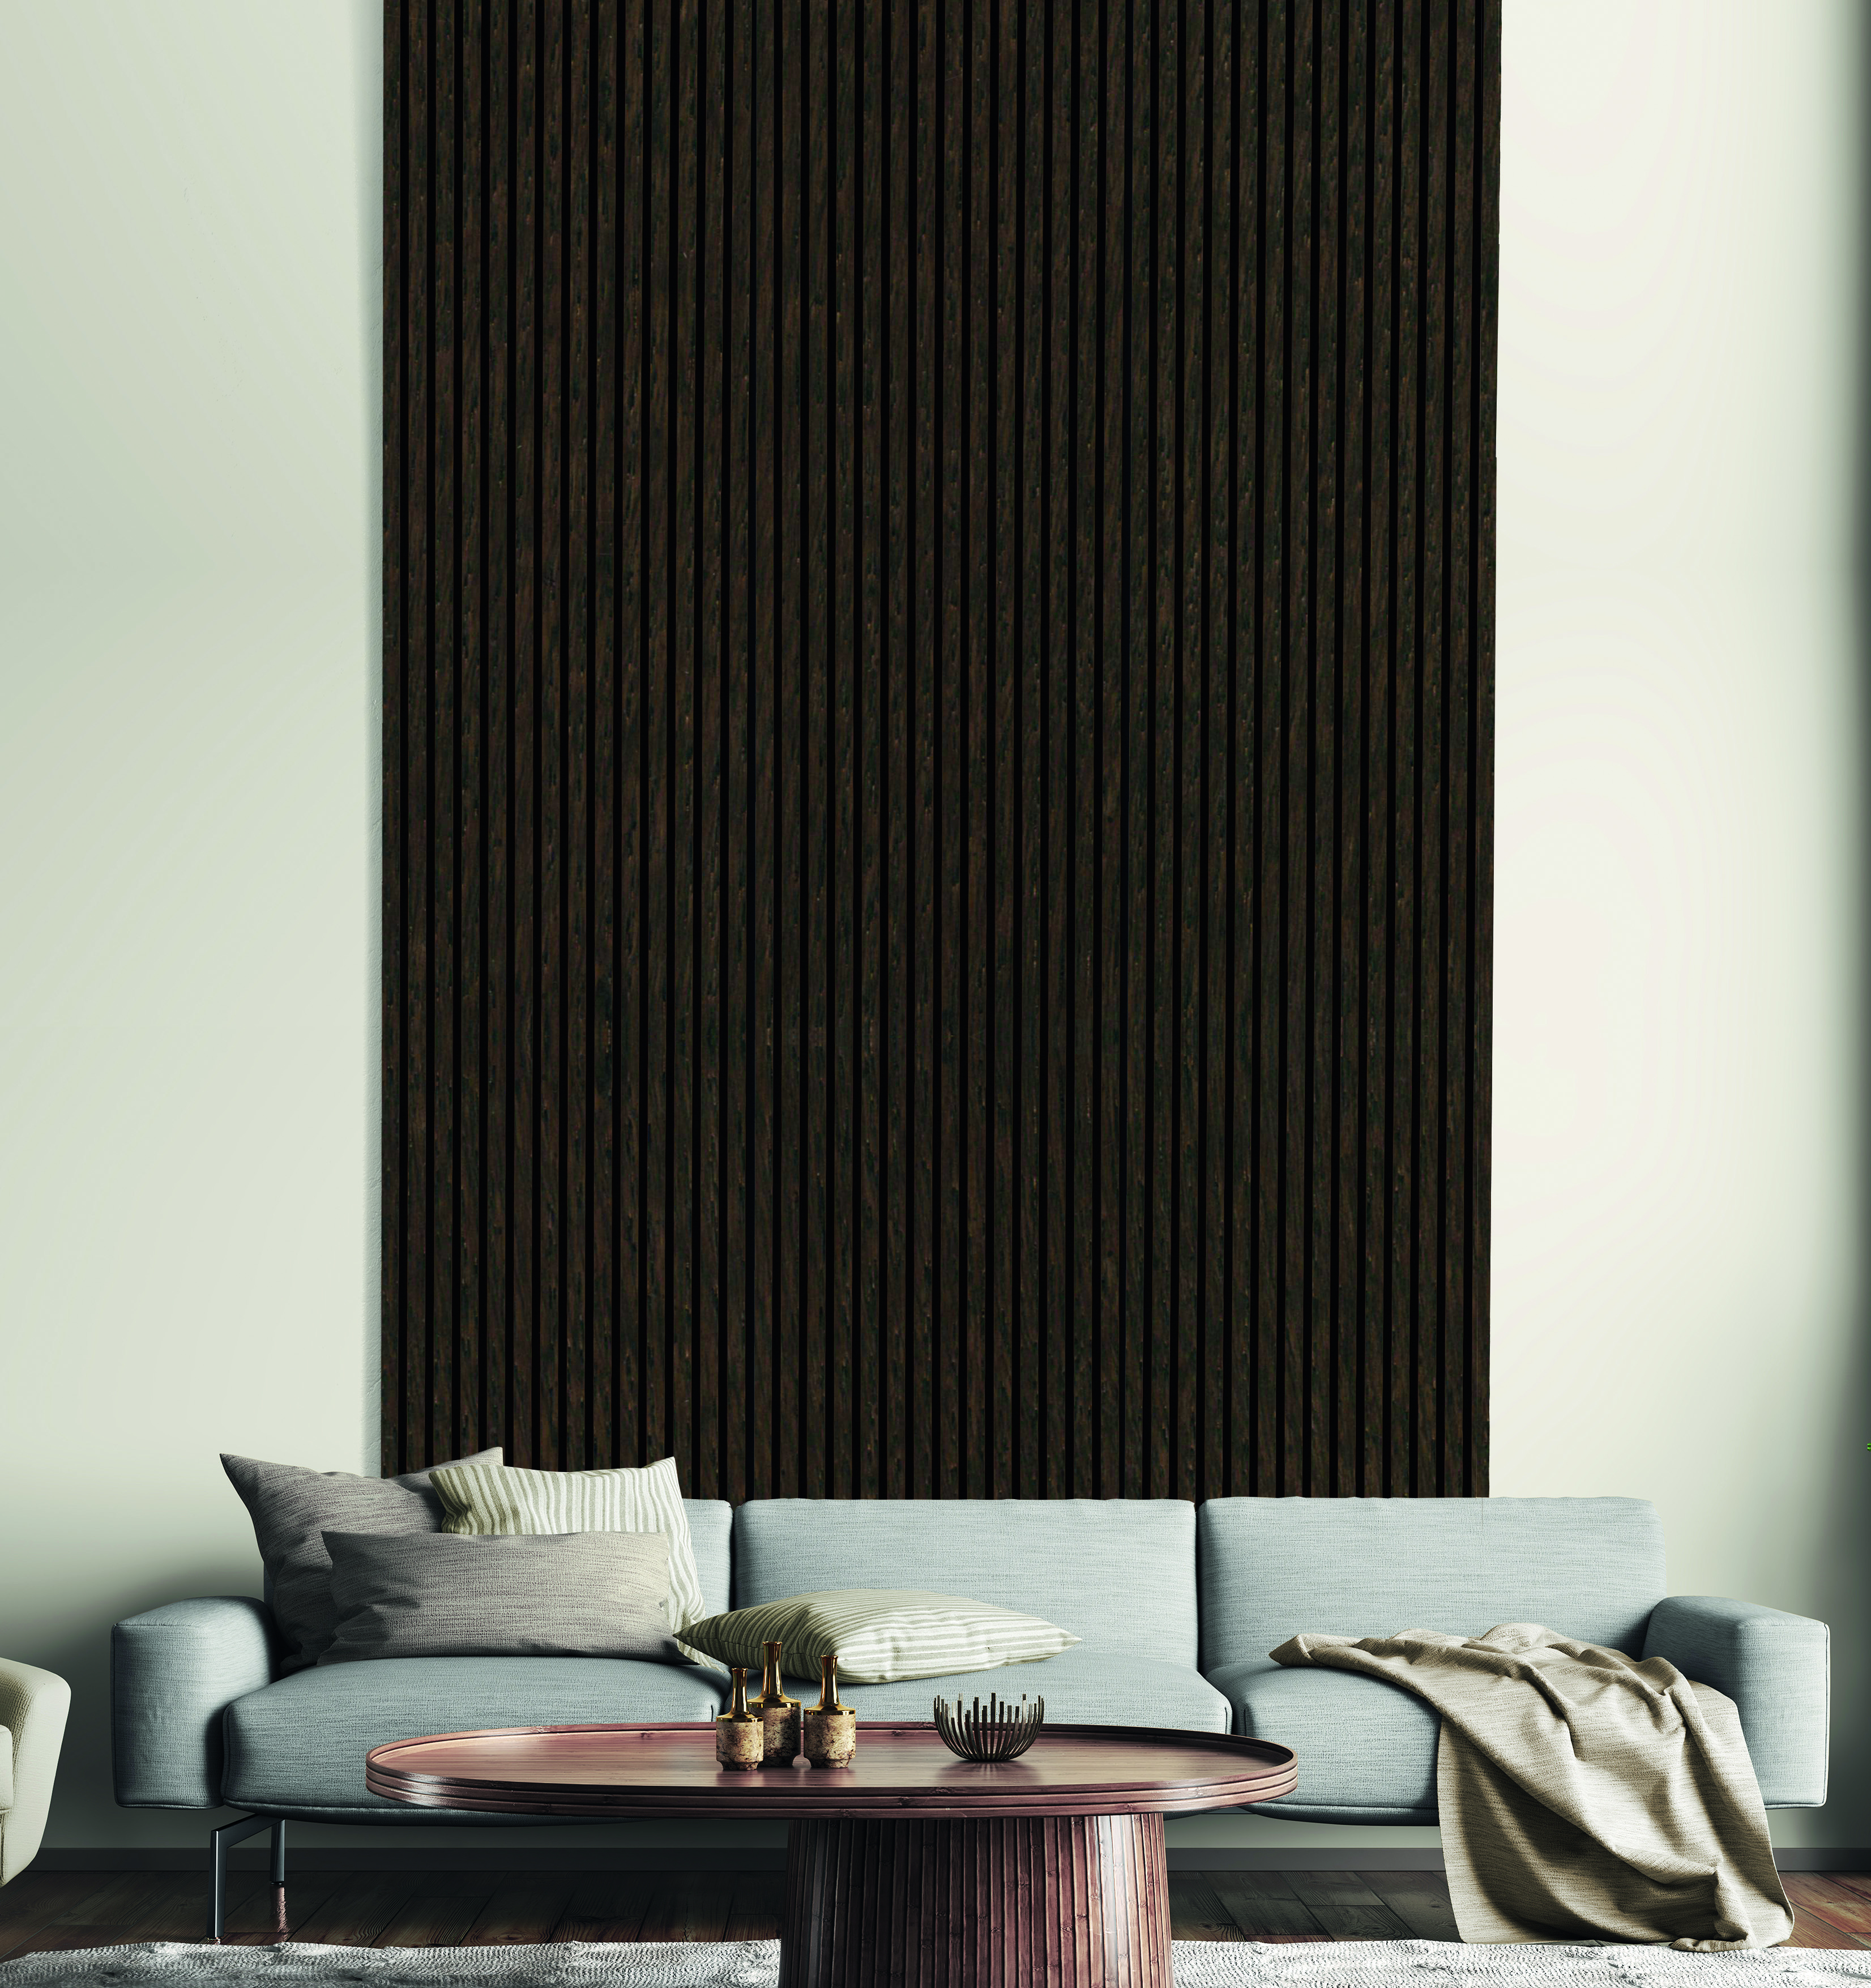 Acoustic Slat Wall Smoked Oak Veneer Wood Panels - 19 x 573 x 1200mm